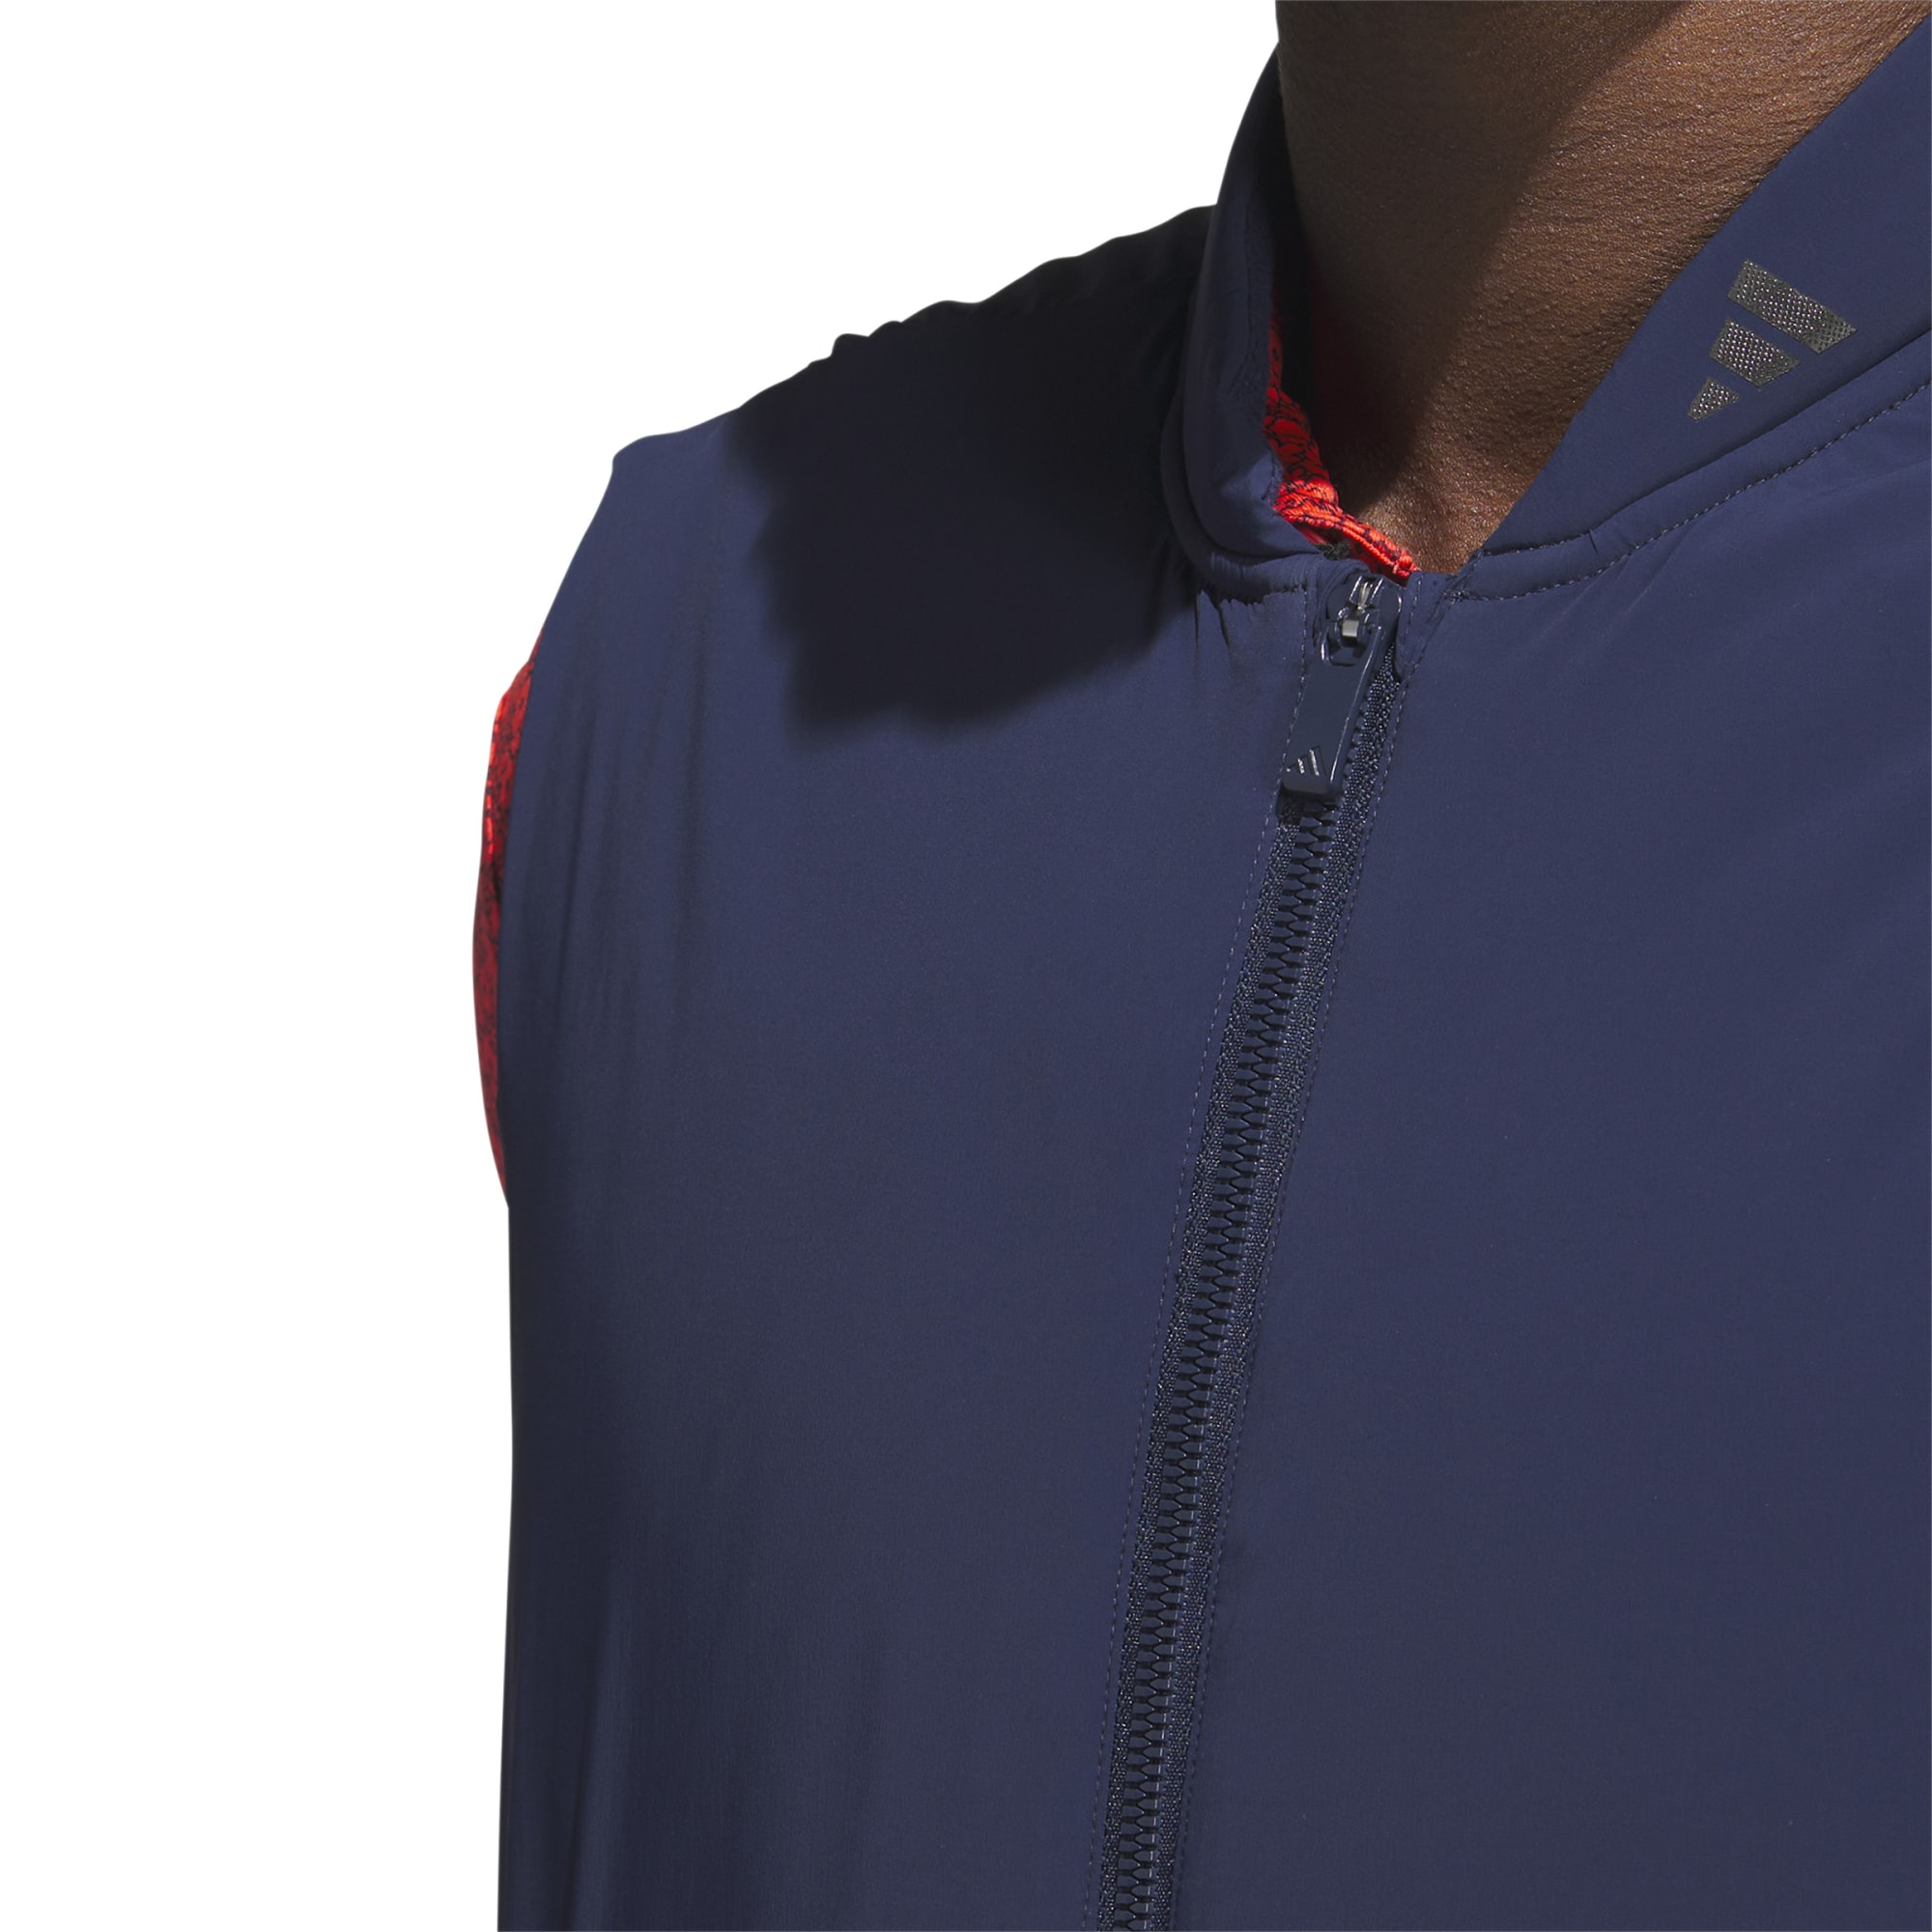 adidas Ultimate365 Tour FrostGuard Padded Vest 